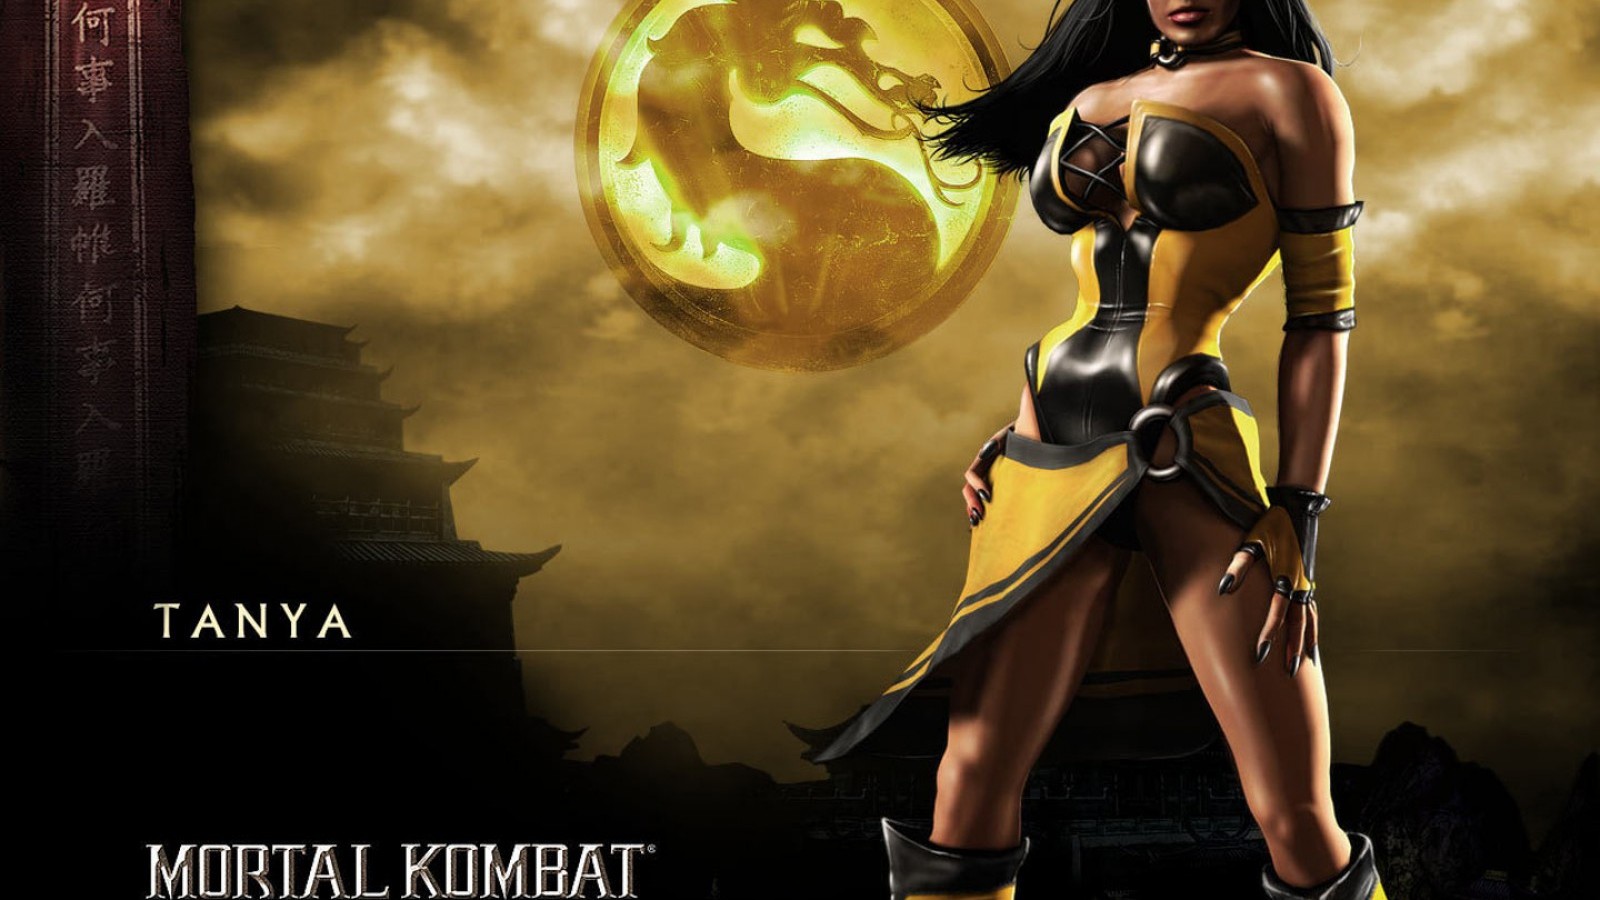 Desktop Backgrounds Mortal Kombat 